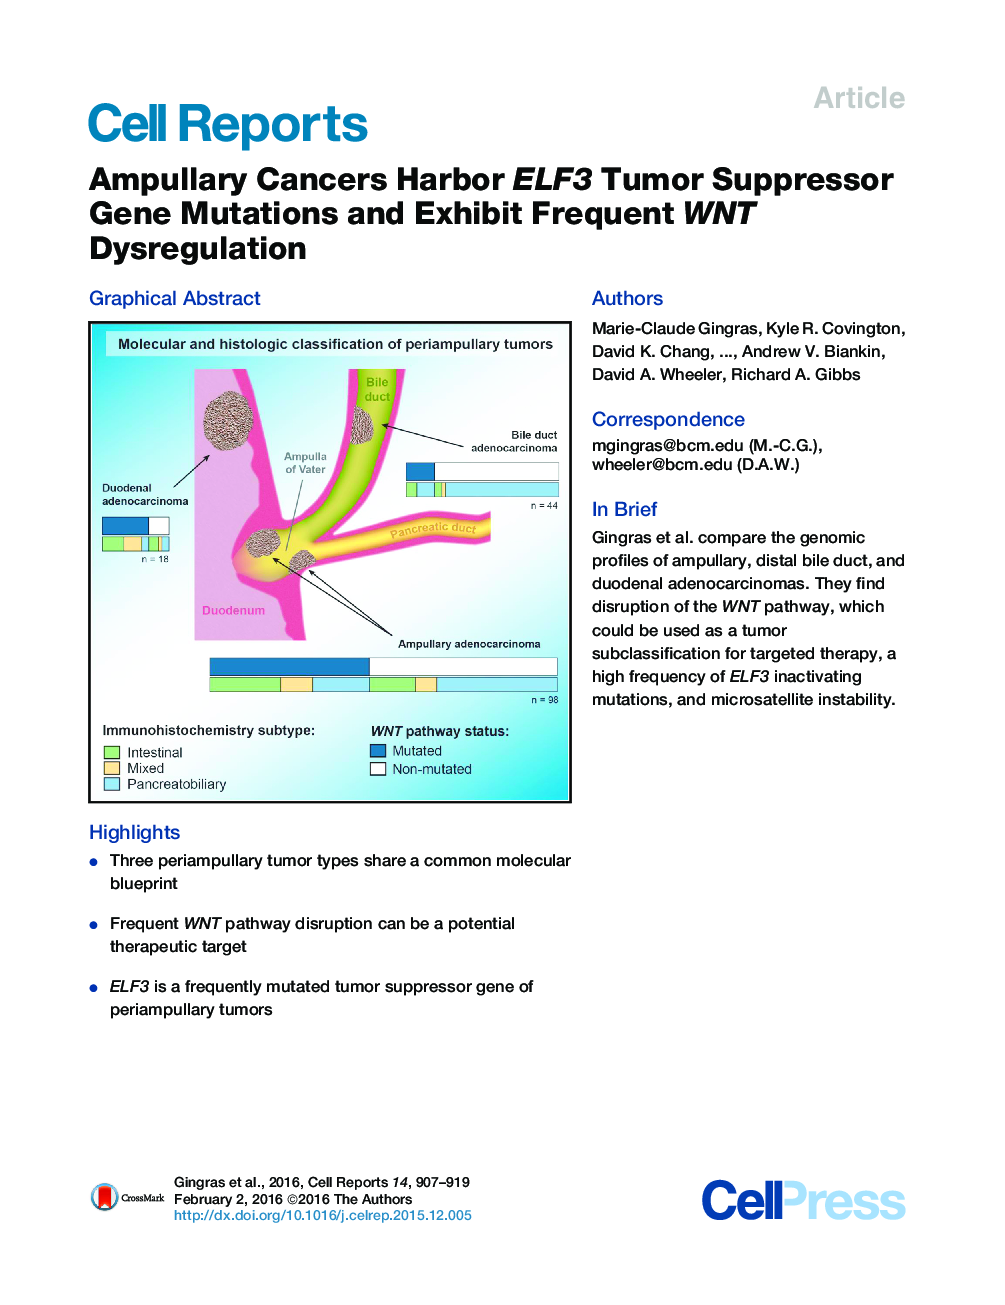 Ampullary Cancers Harbor ELF3 Tumor Suppressor Gene Mutations and Exhibit Frequent WNT Dysregulation 